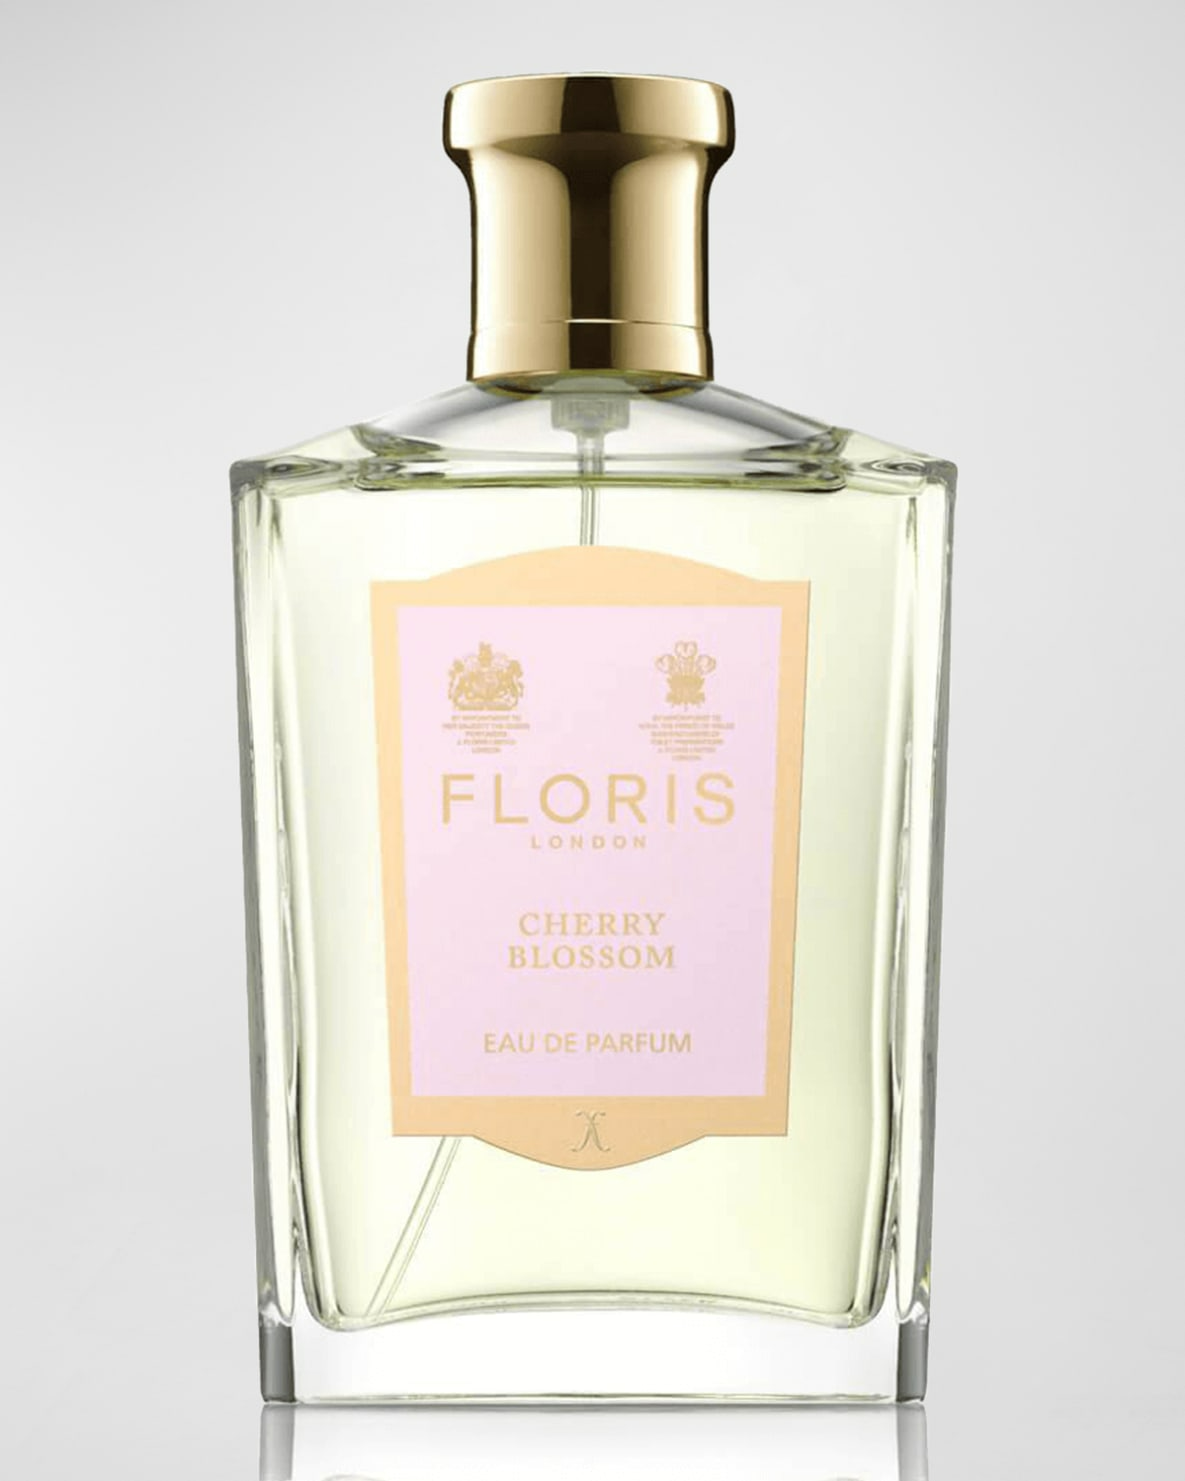 Floris London Cherry Blossom Eau de Parfum - 3.4 Oz